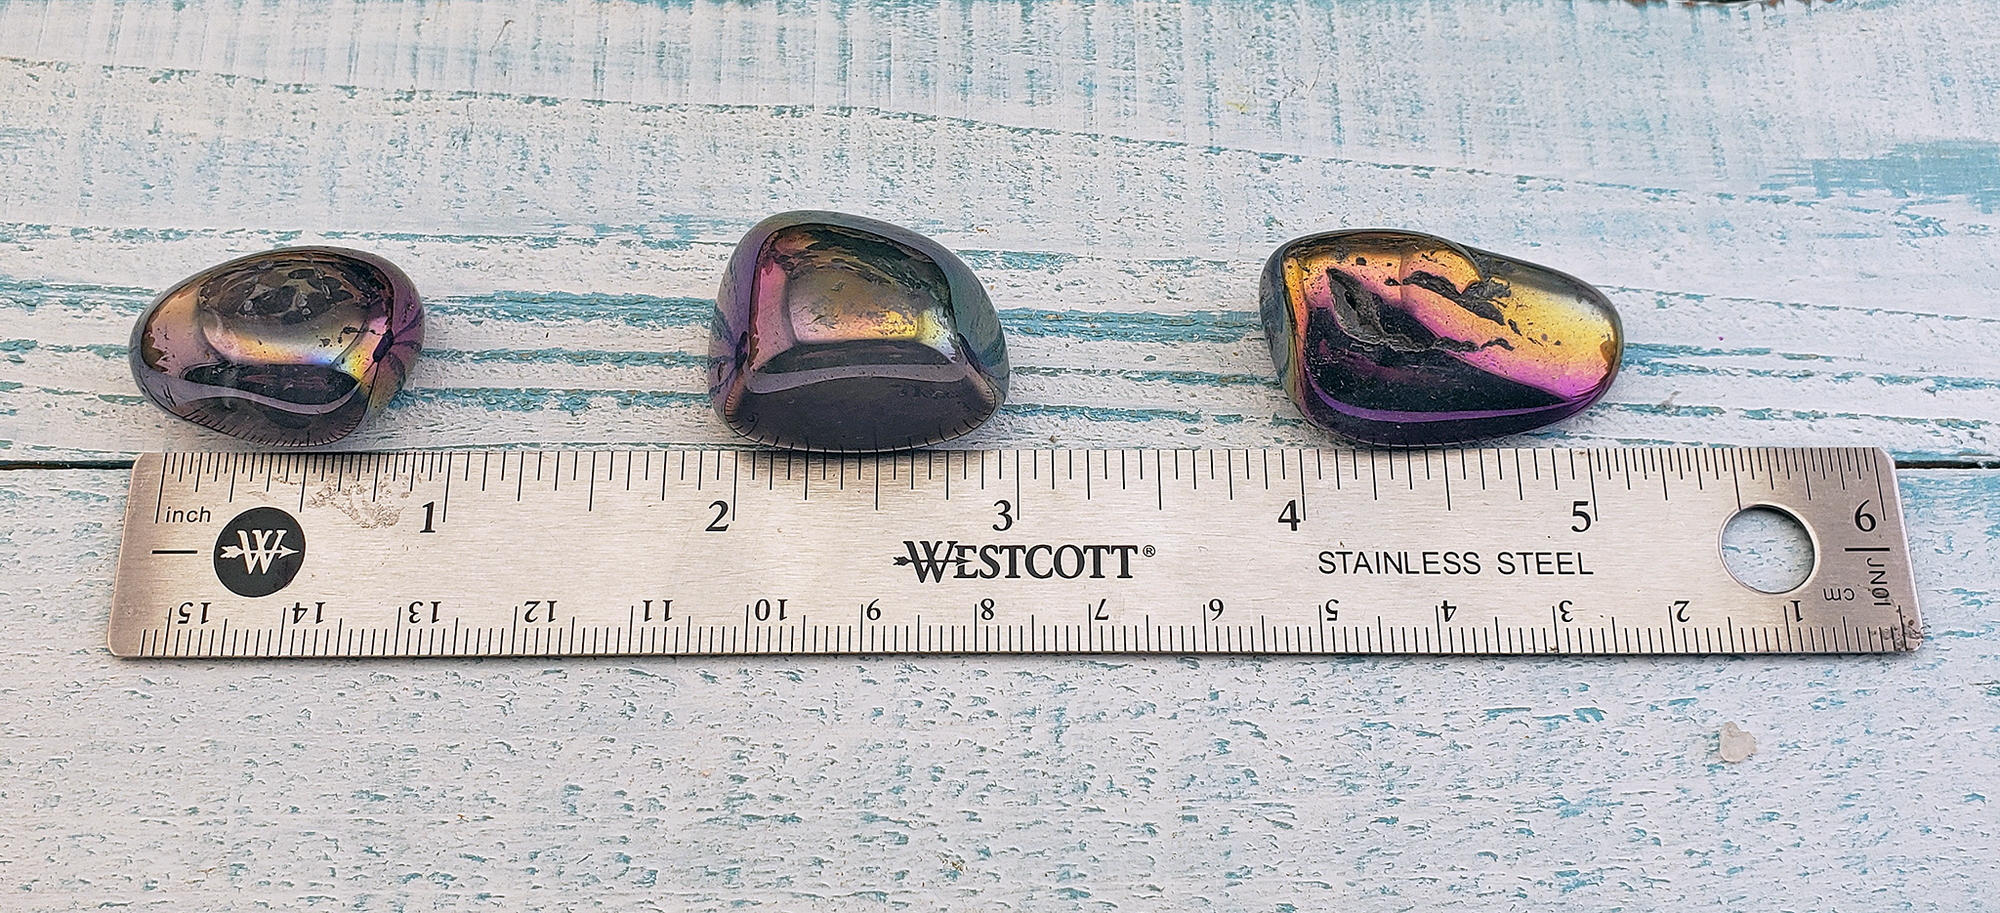 Ethereal Aura Amethyst Tumbled Gemstone - Size Comparison